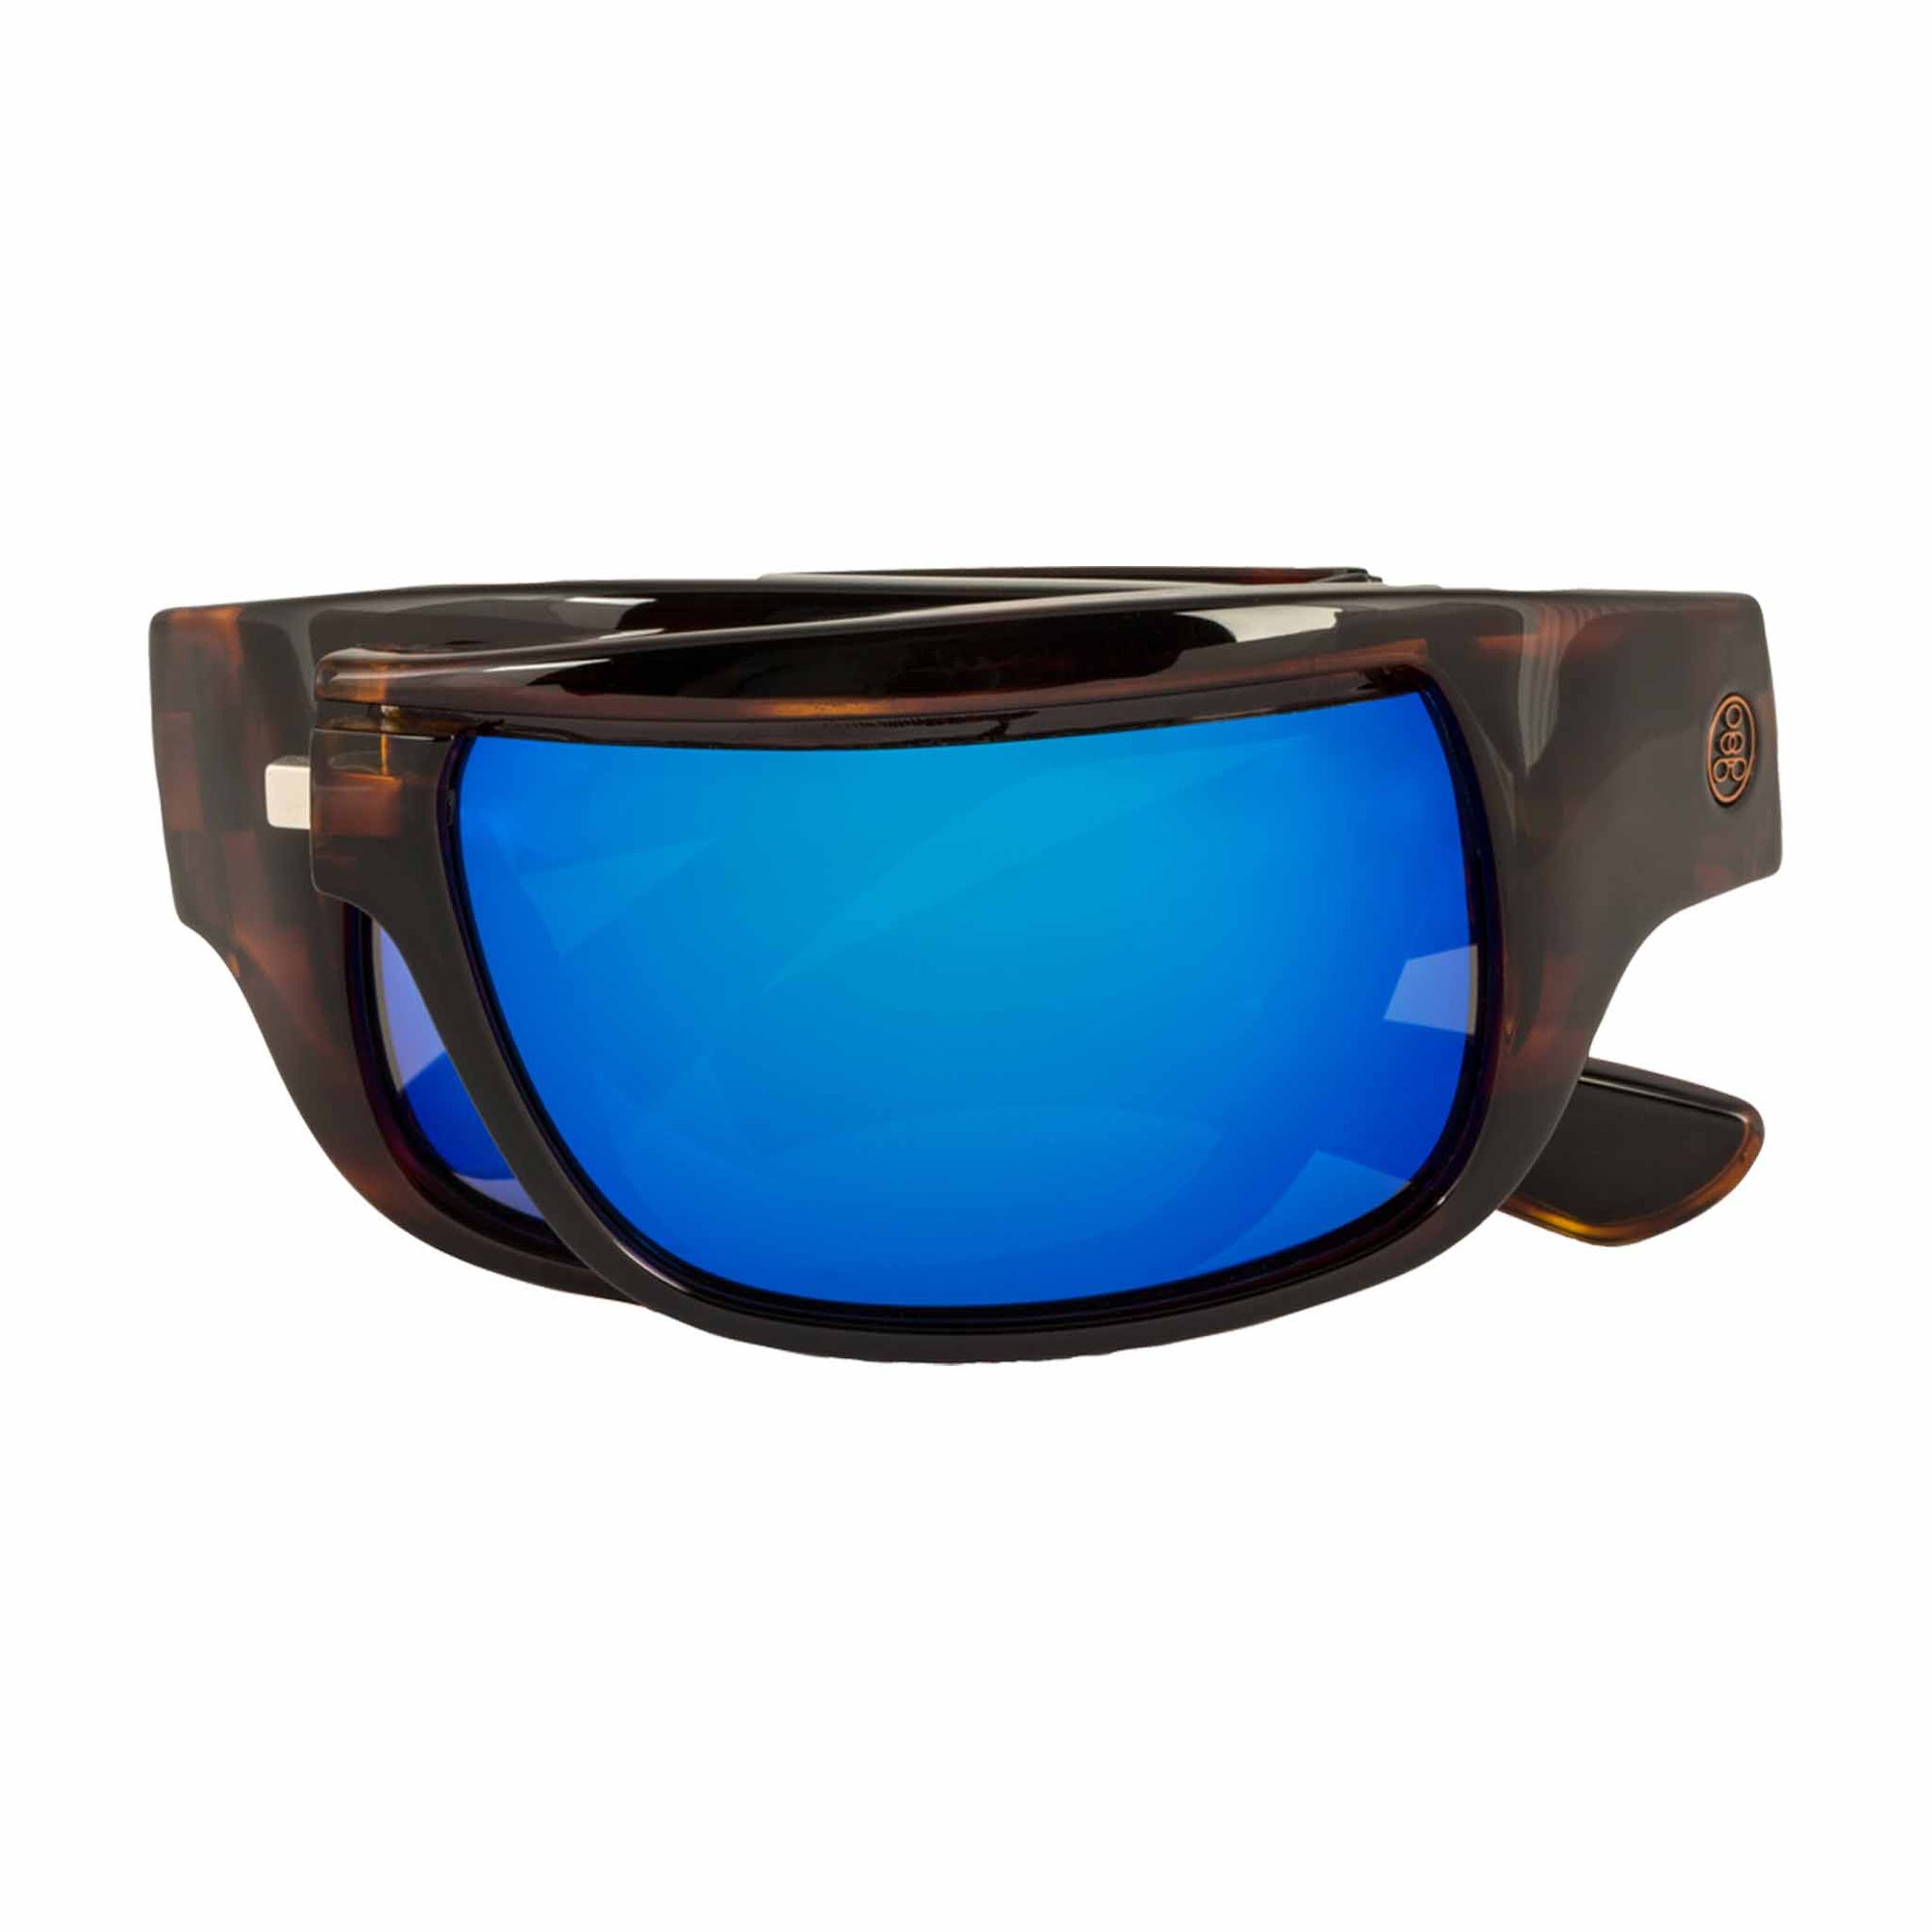 Popticals, Premium Compact Sunglasses, PopH2O, 010070-CTUN, Polarized Sunglasses, Gloss Tortoise Frame, Gray Lenses w/Blue Mirror Finish, Compact View